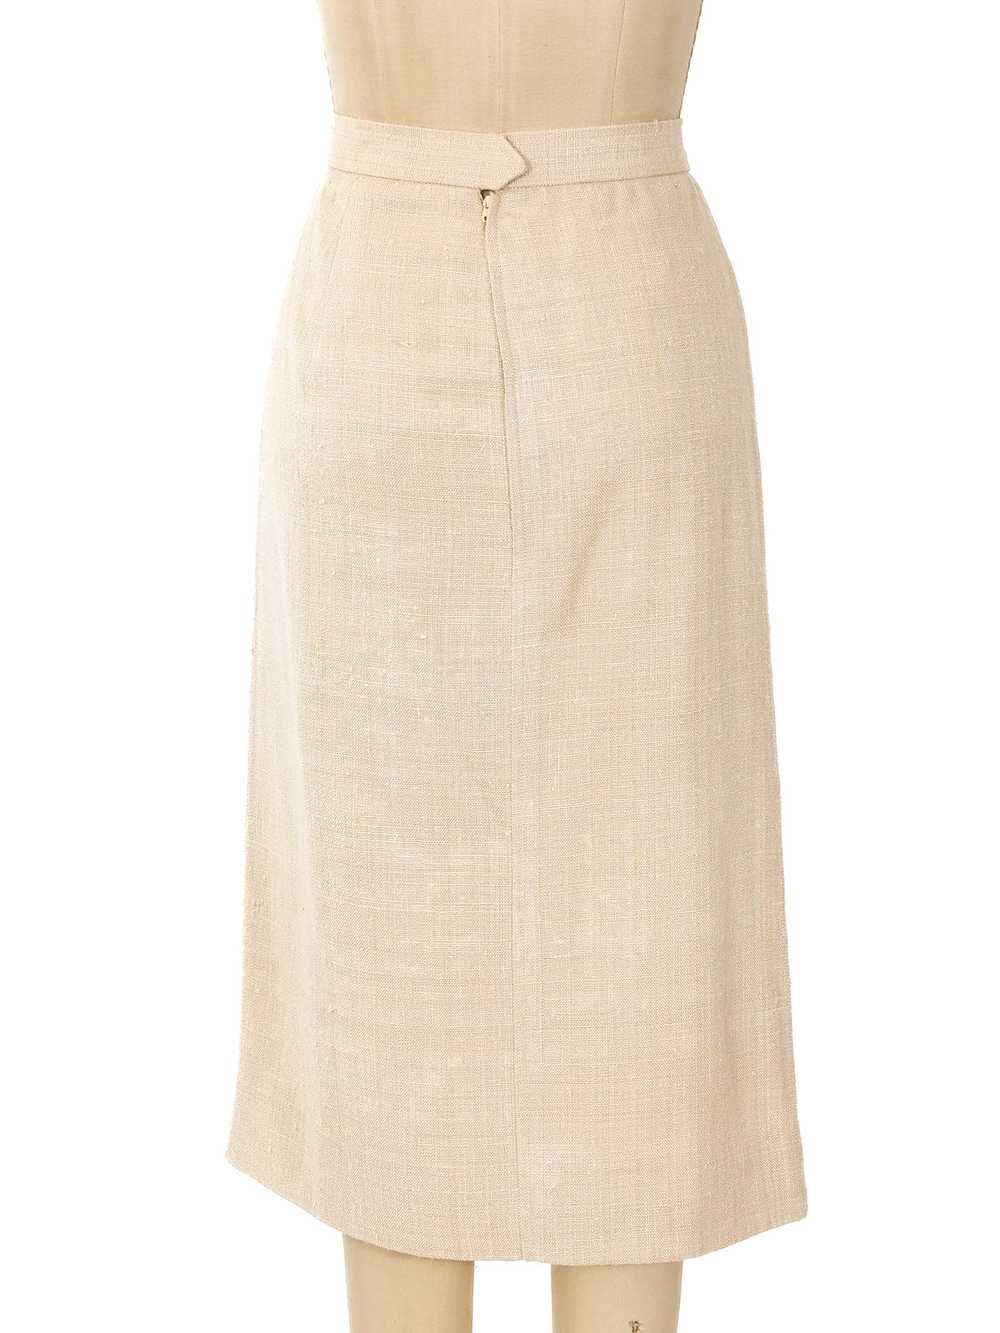 Yves Saint Laurent Natural Silk Skirt Suit - image 8